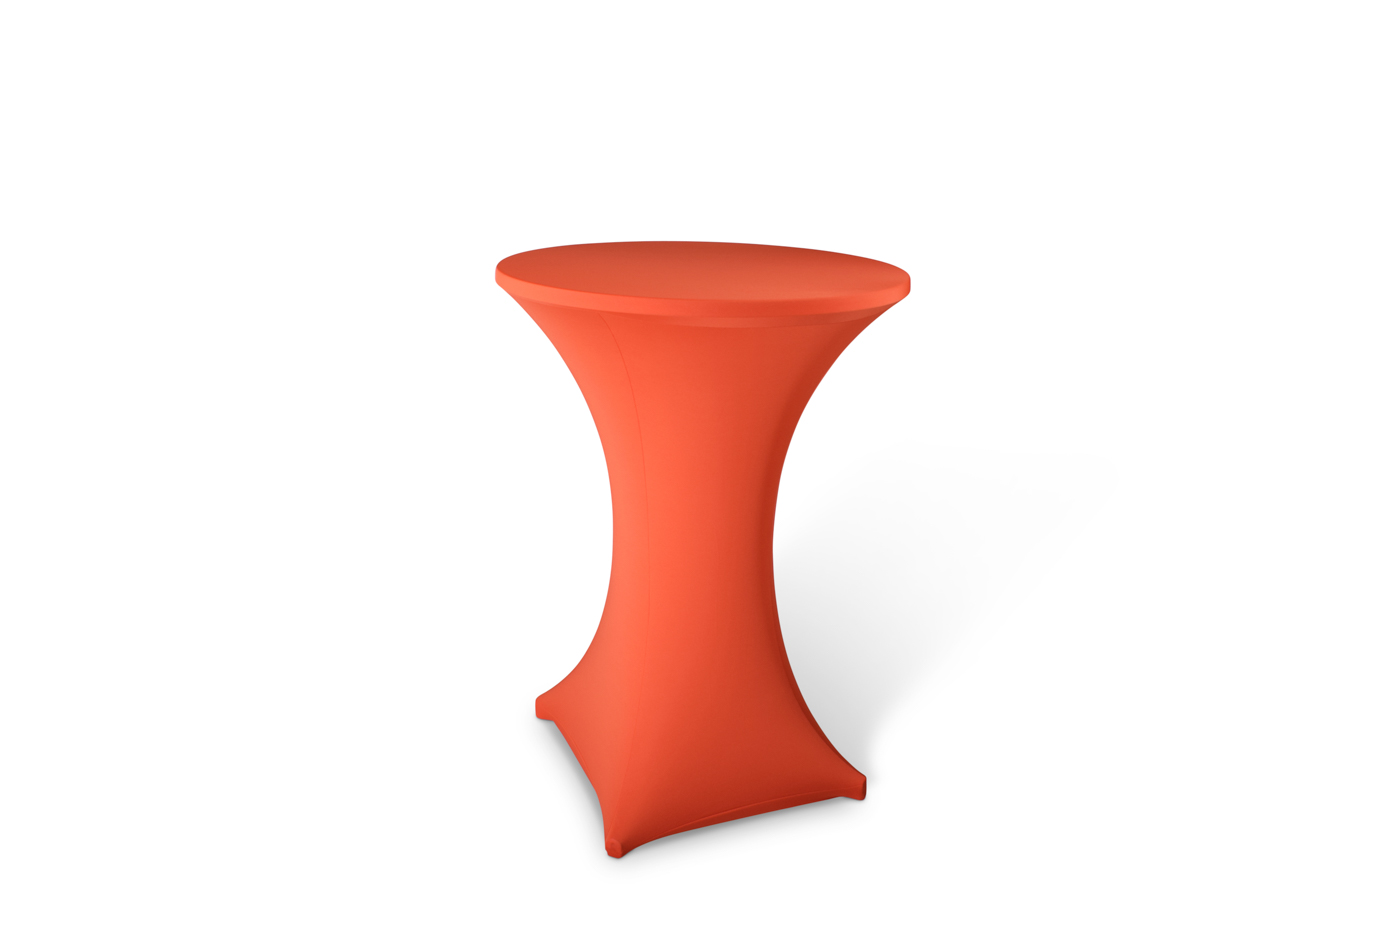 Stretch-Stehtischhusse MARS, Farbe: orange, Durchmesser: 70-75 cm, incl. Topcover, 210 g/qm, Material: 10% Elastan, 90% Polyester